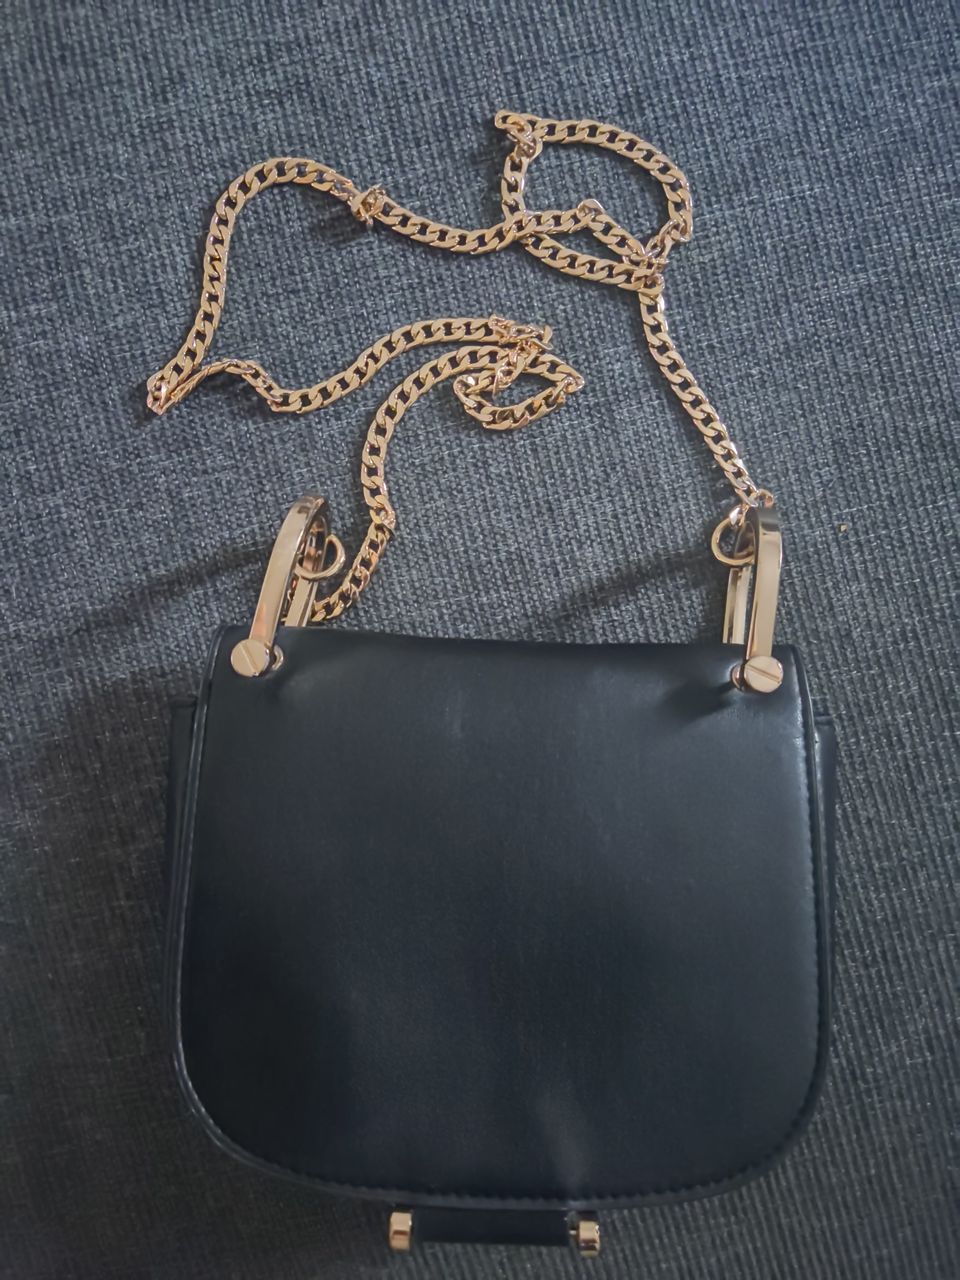 A handbag/purse/laukut